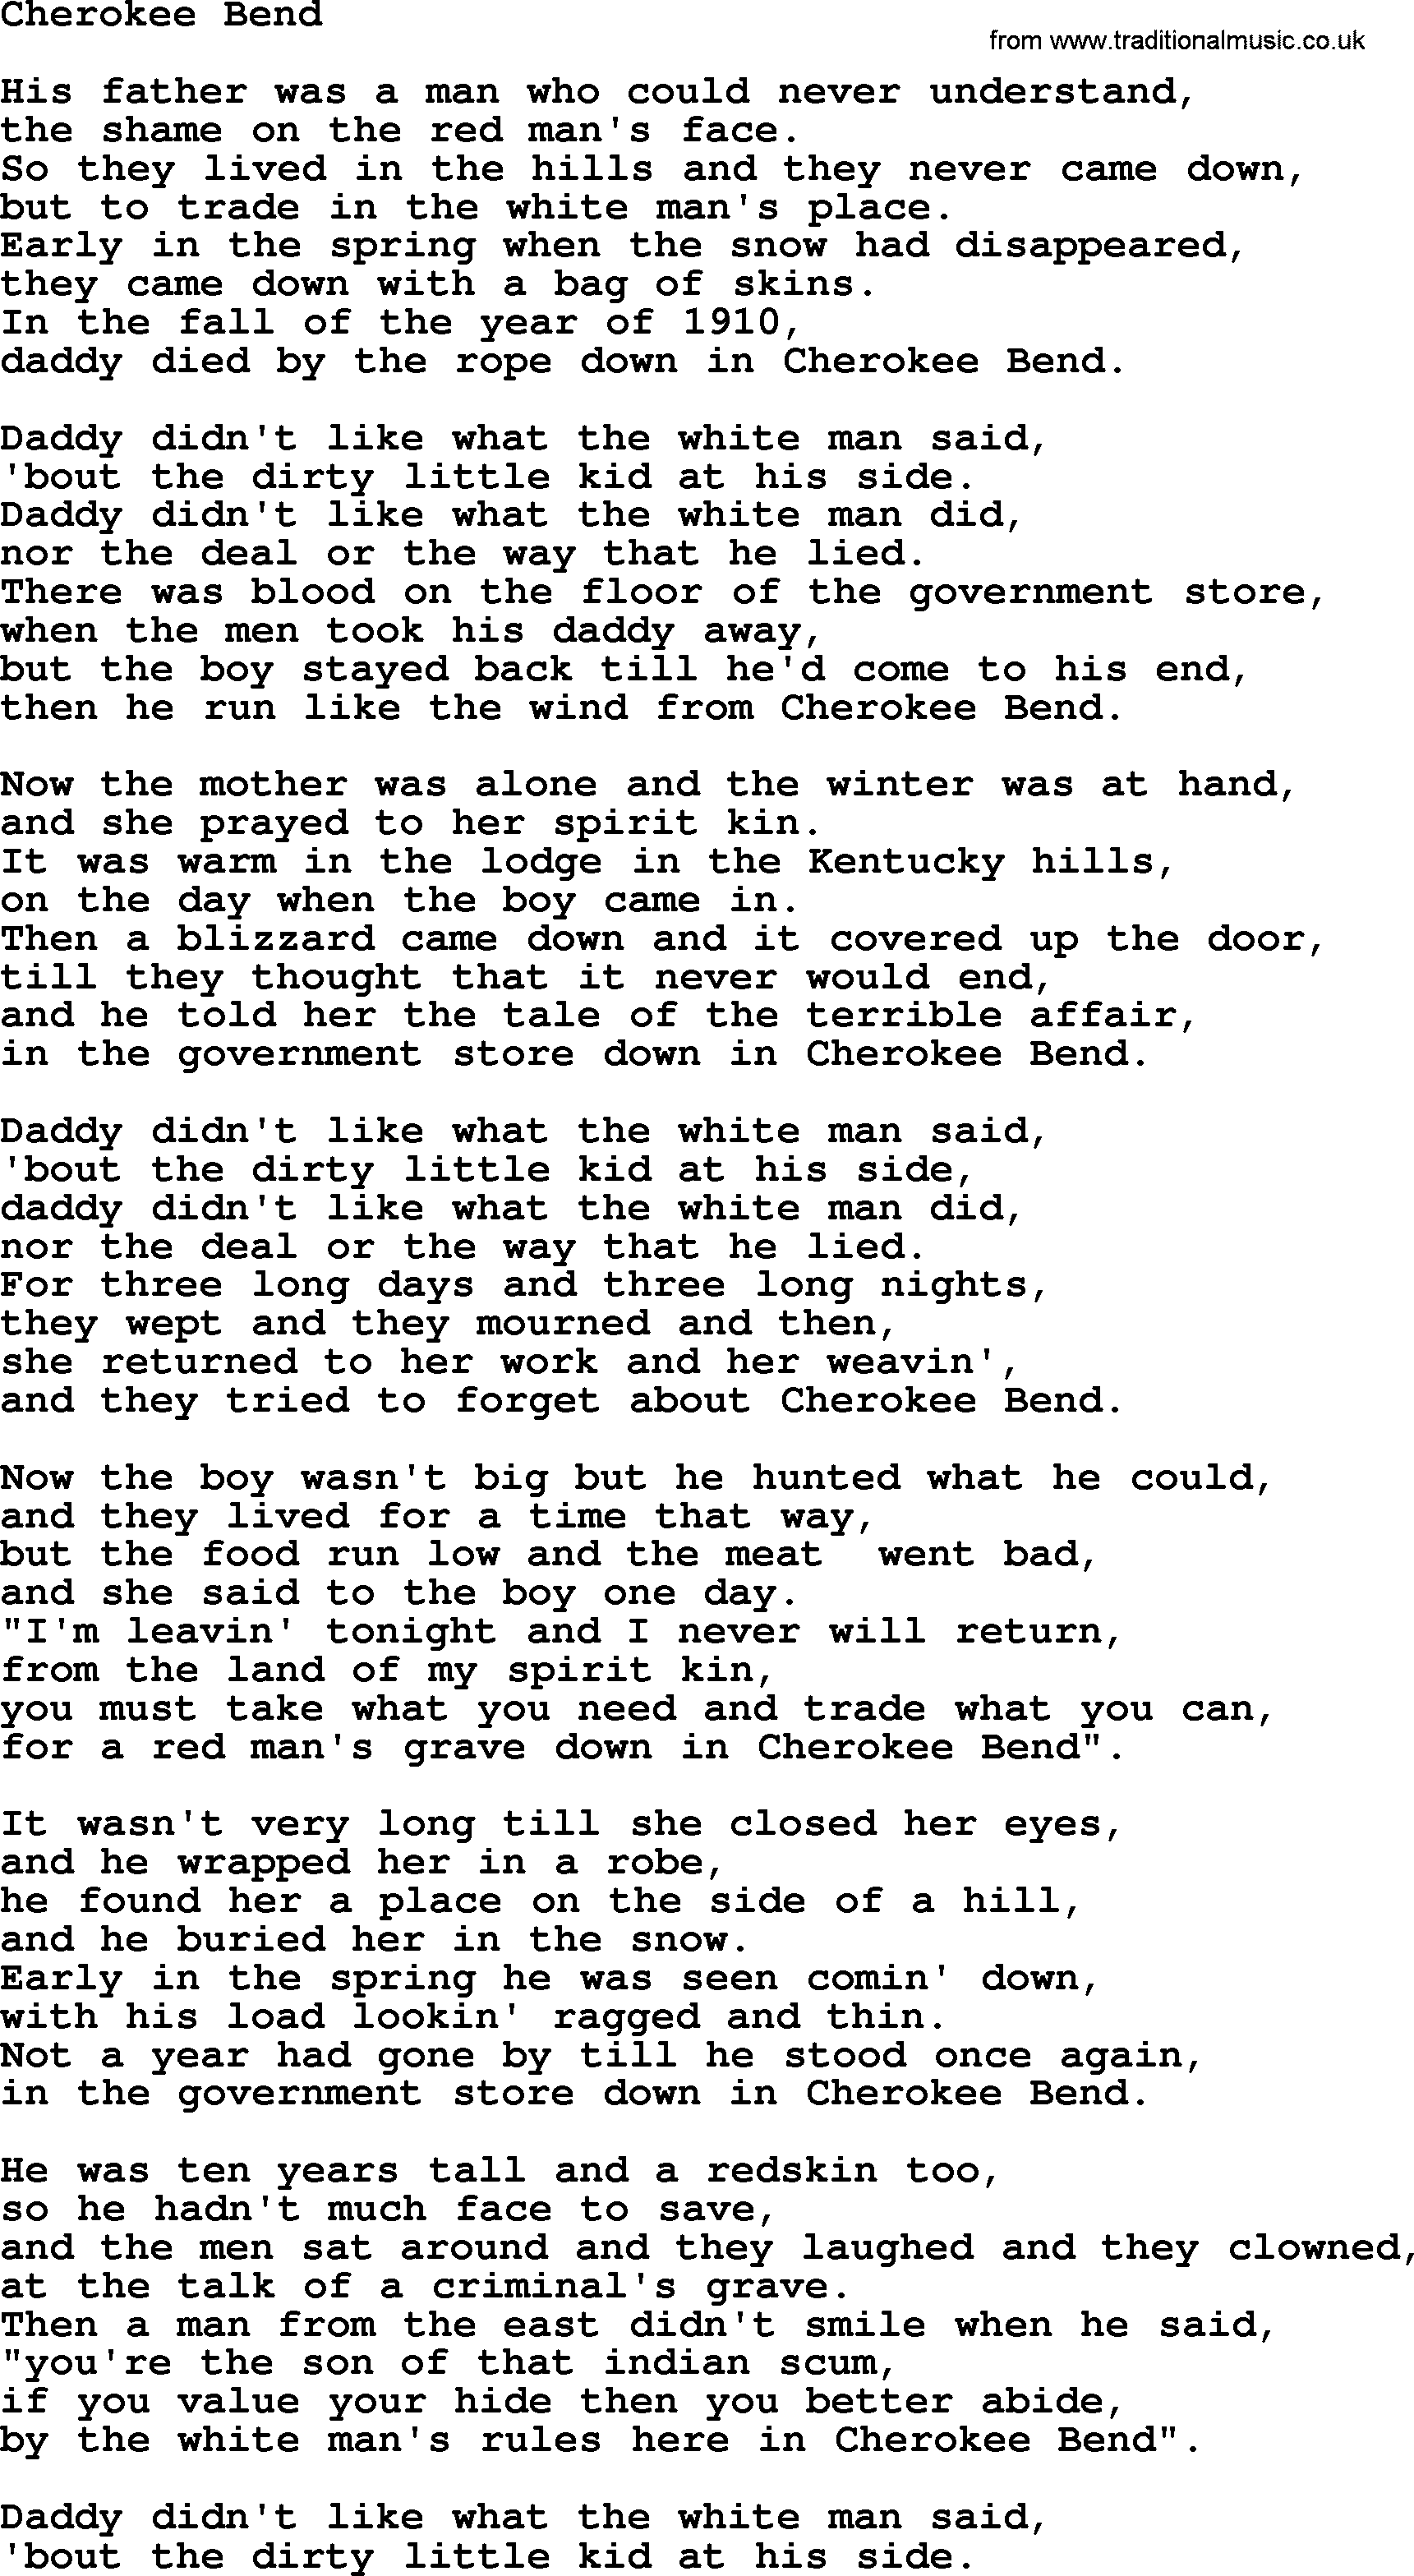 Gordon Lightfoot song Cherokee Bend, lyrics